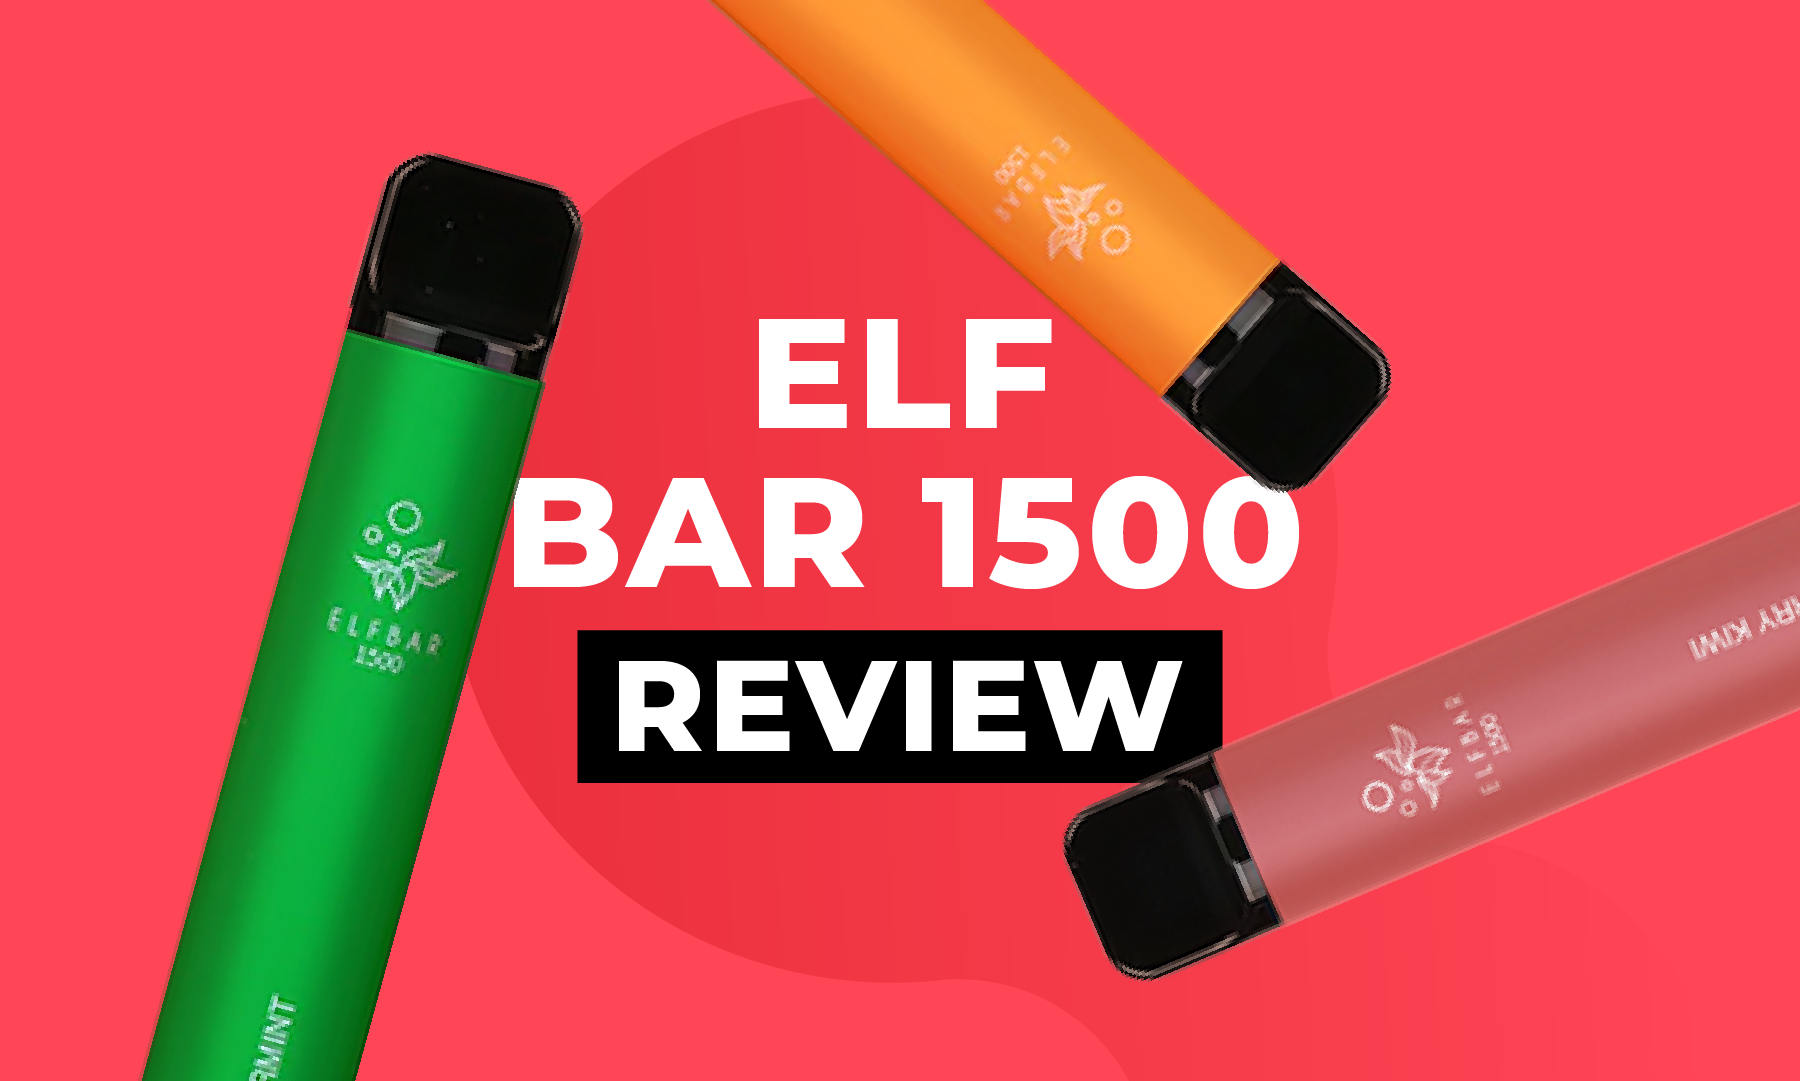 Elf Bar 1500 Review